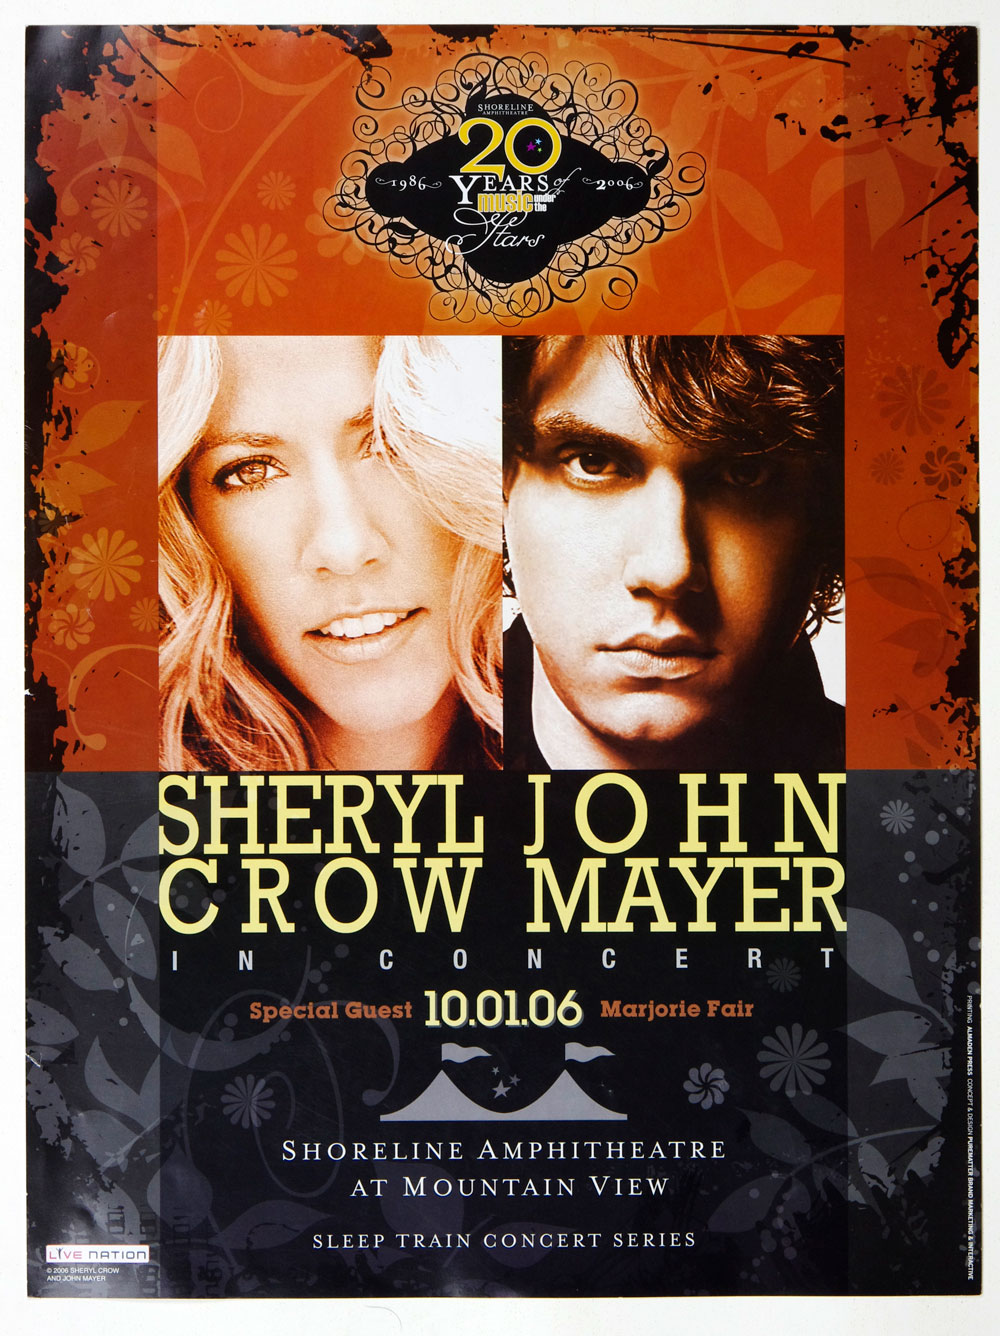 Sheryl Crow John Mayer Poster Oct Shoreline Amphitheatre X Vintage Collectibles